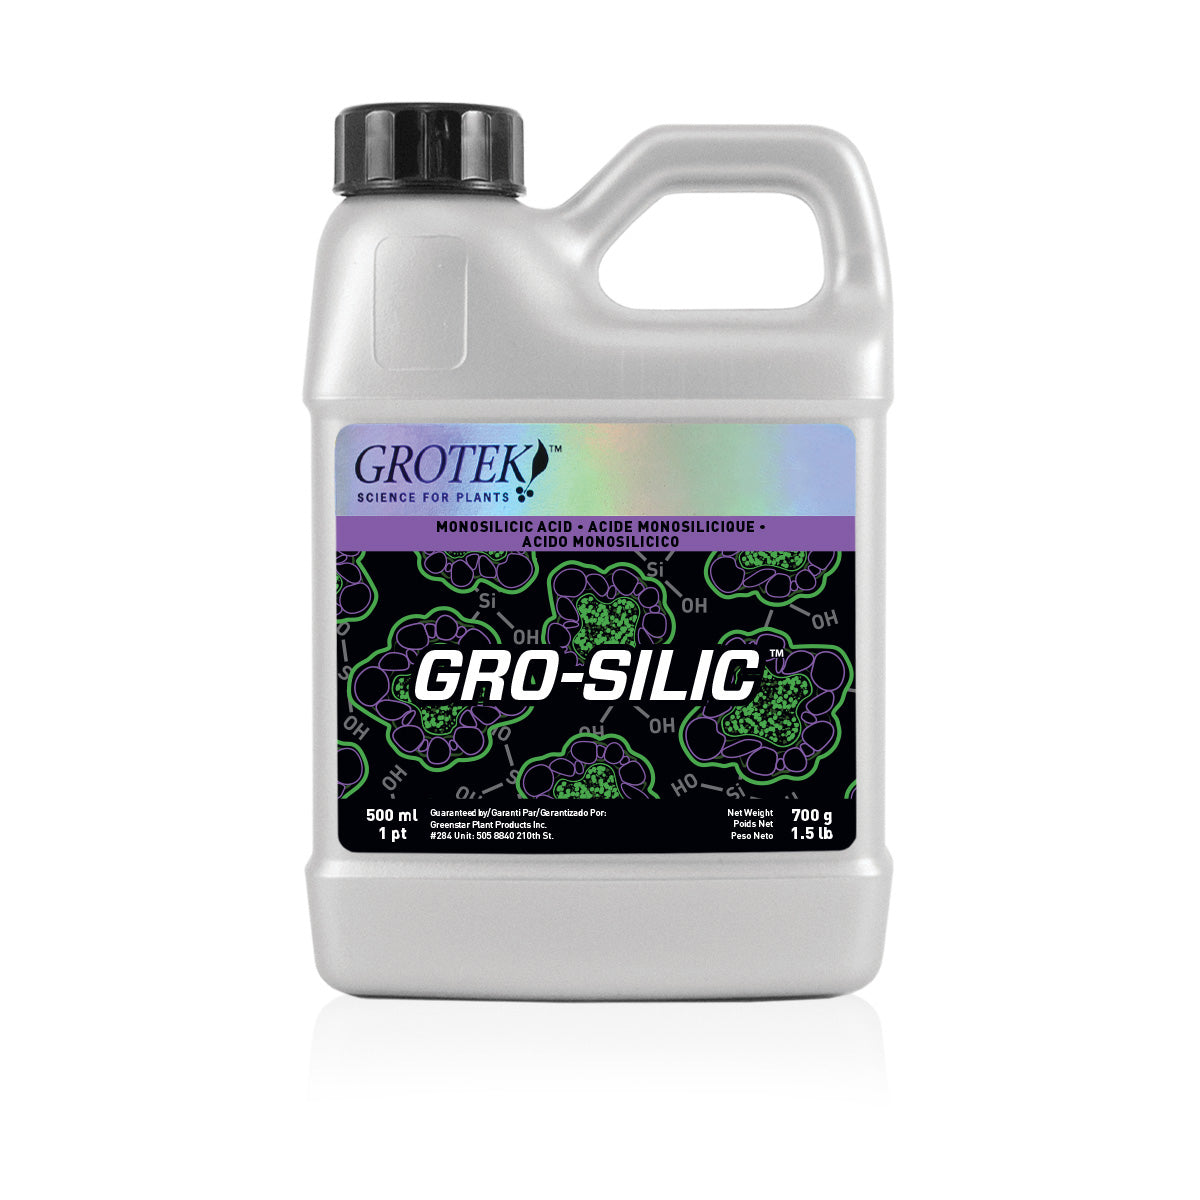 Product Secondary Image:Grotek Gro-Silic